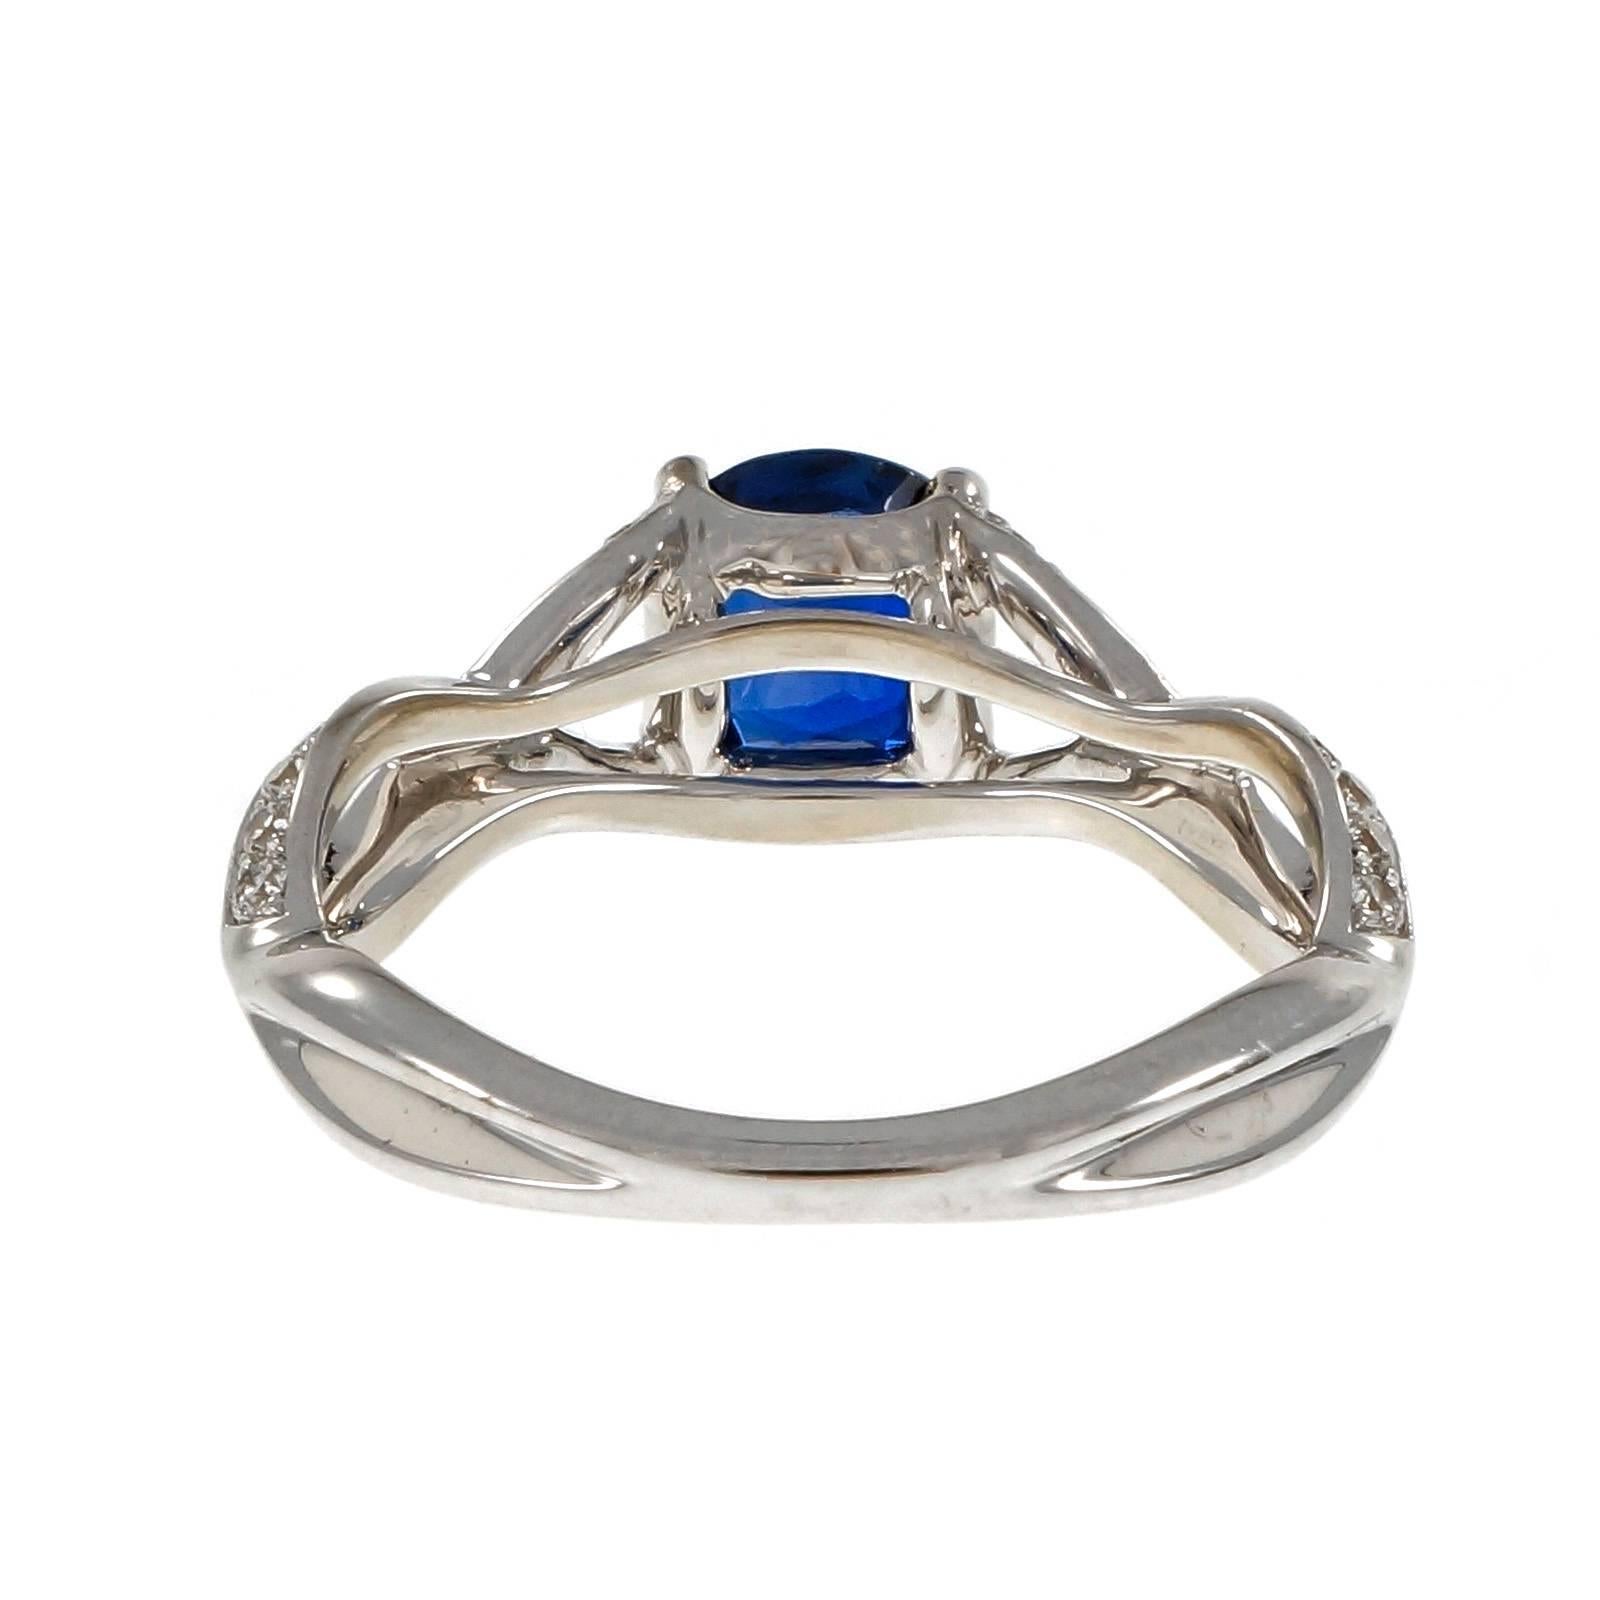 1.25 Carat Cushion Cut Royal Blue Sapphire Diamond Gold Engagement Ring 1